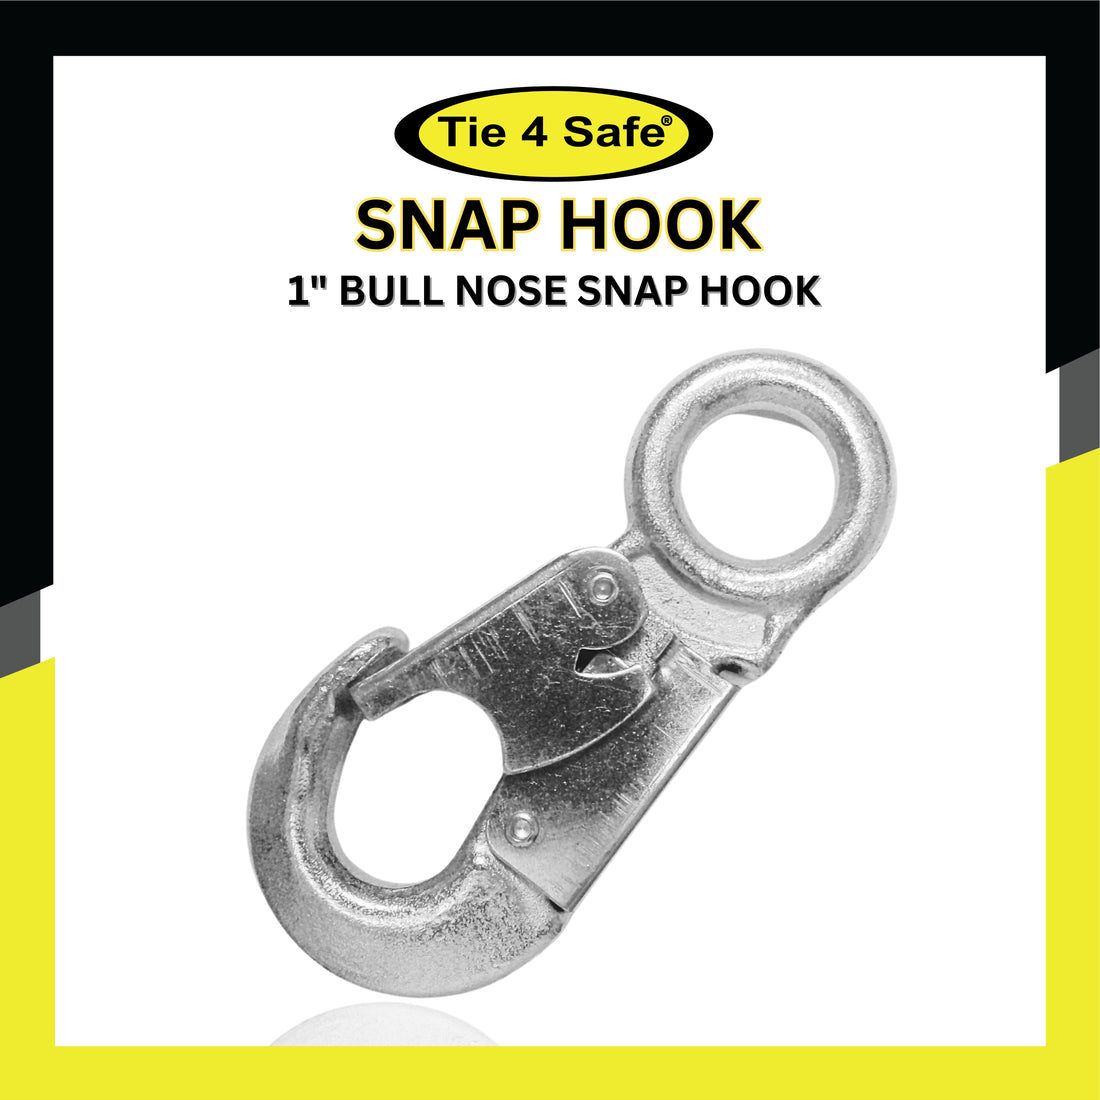 1" Bull Nose Snap Hook